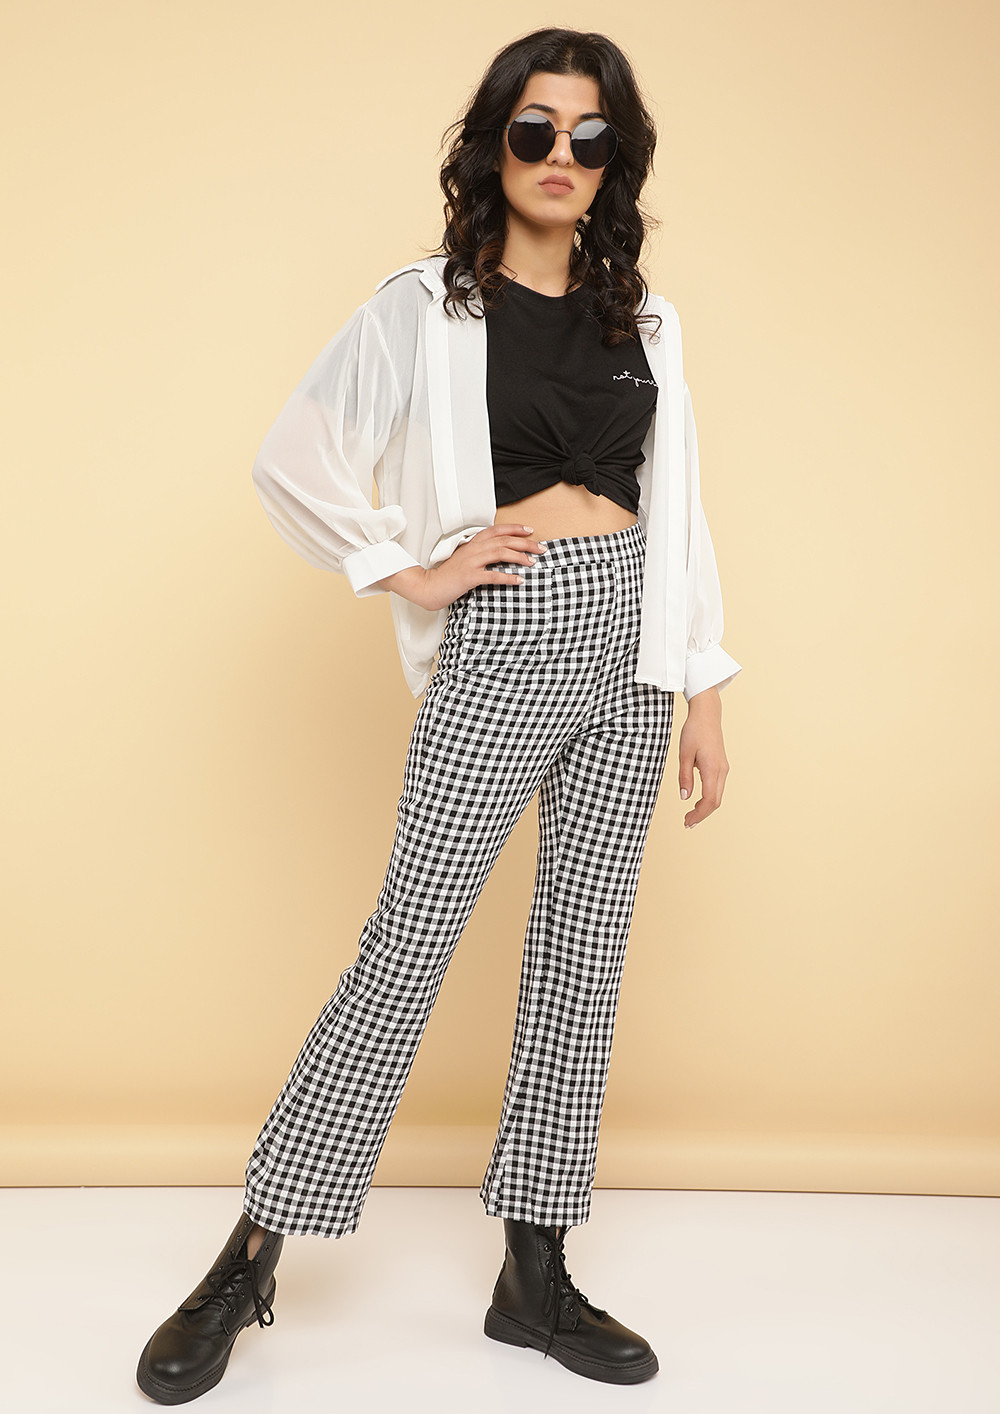 Trendy Women Trousers black and white plaid pants cotton